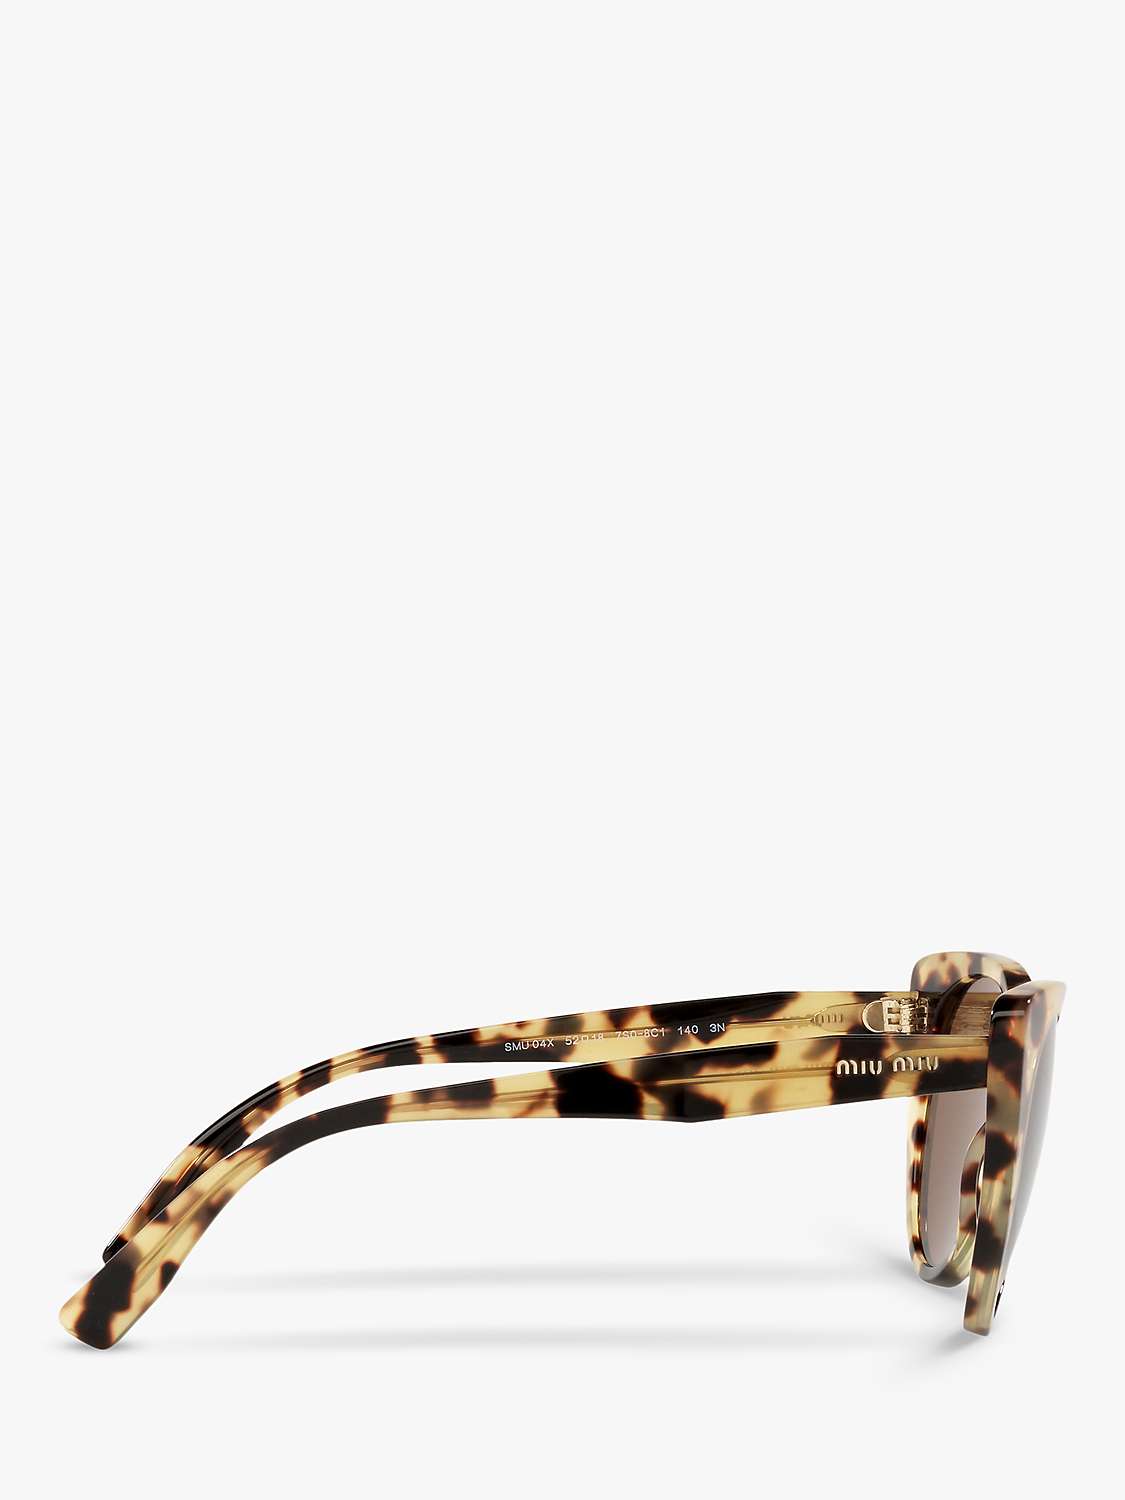 Buy Miu Miu MU 04XS Women's Cat's Eye Sunglasses Online at johnlewis.com